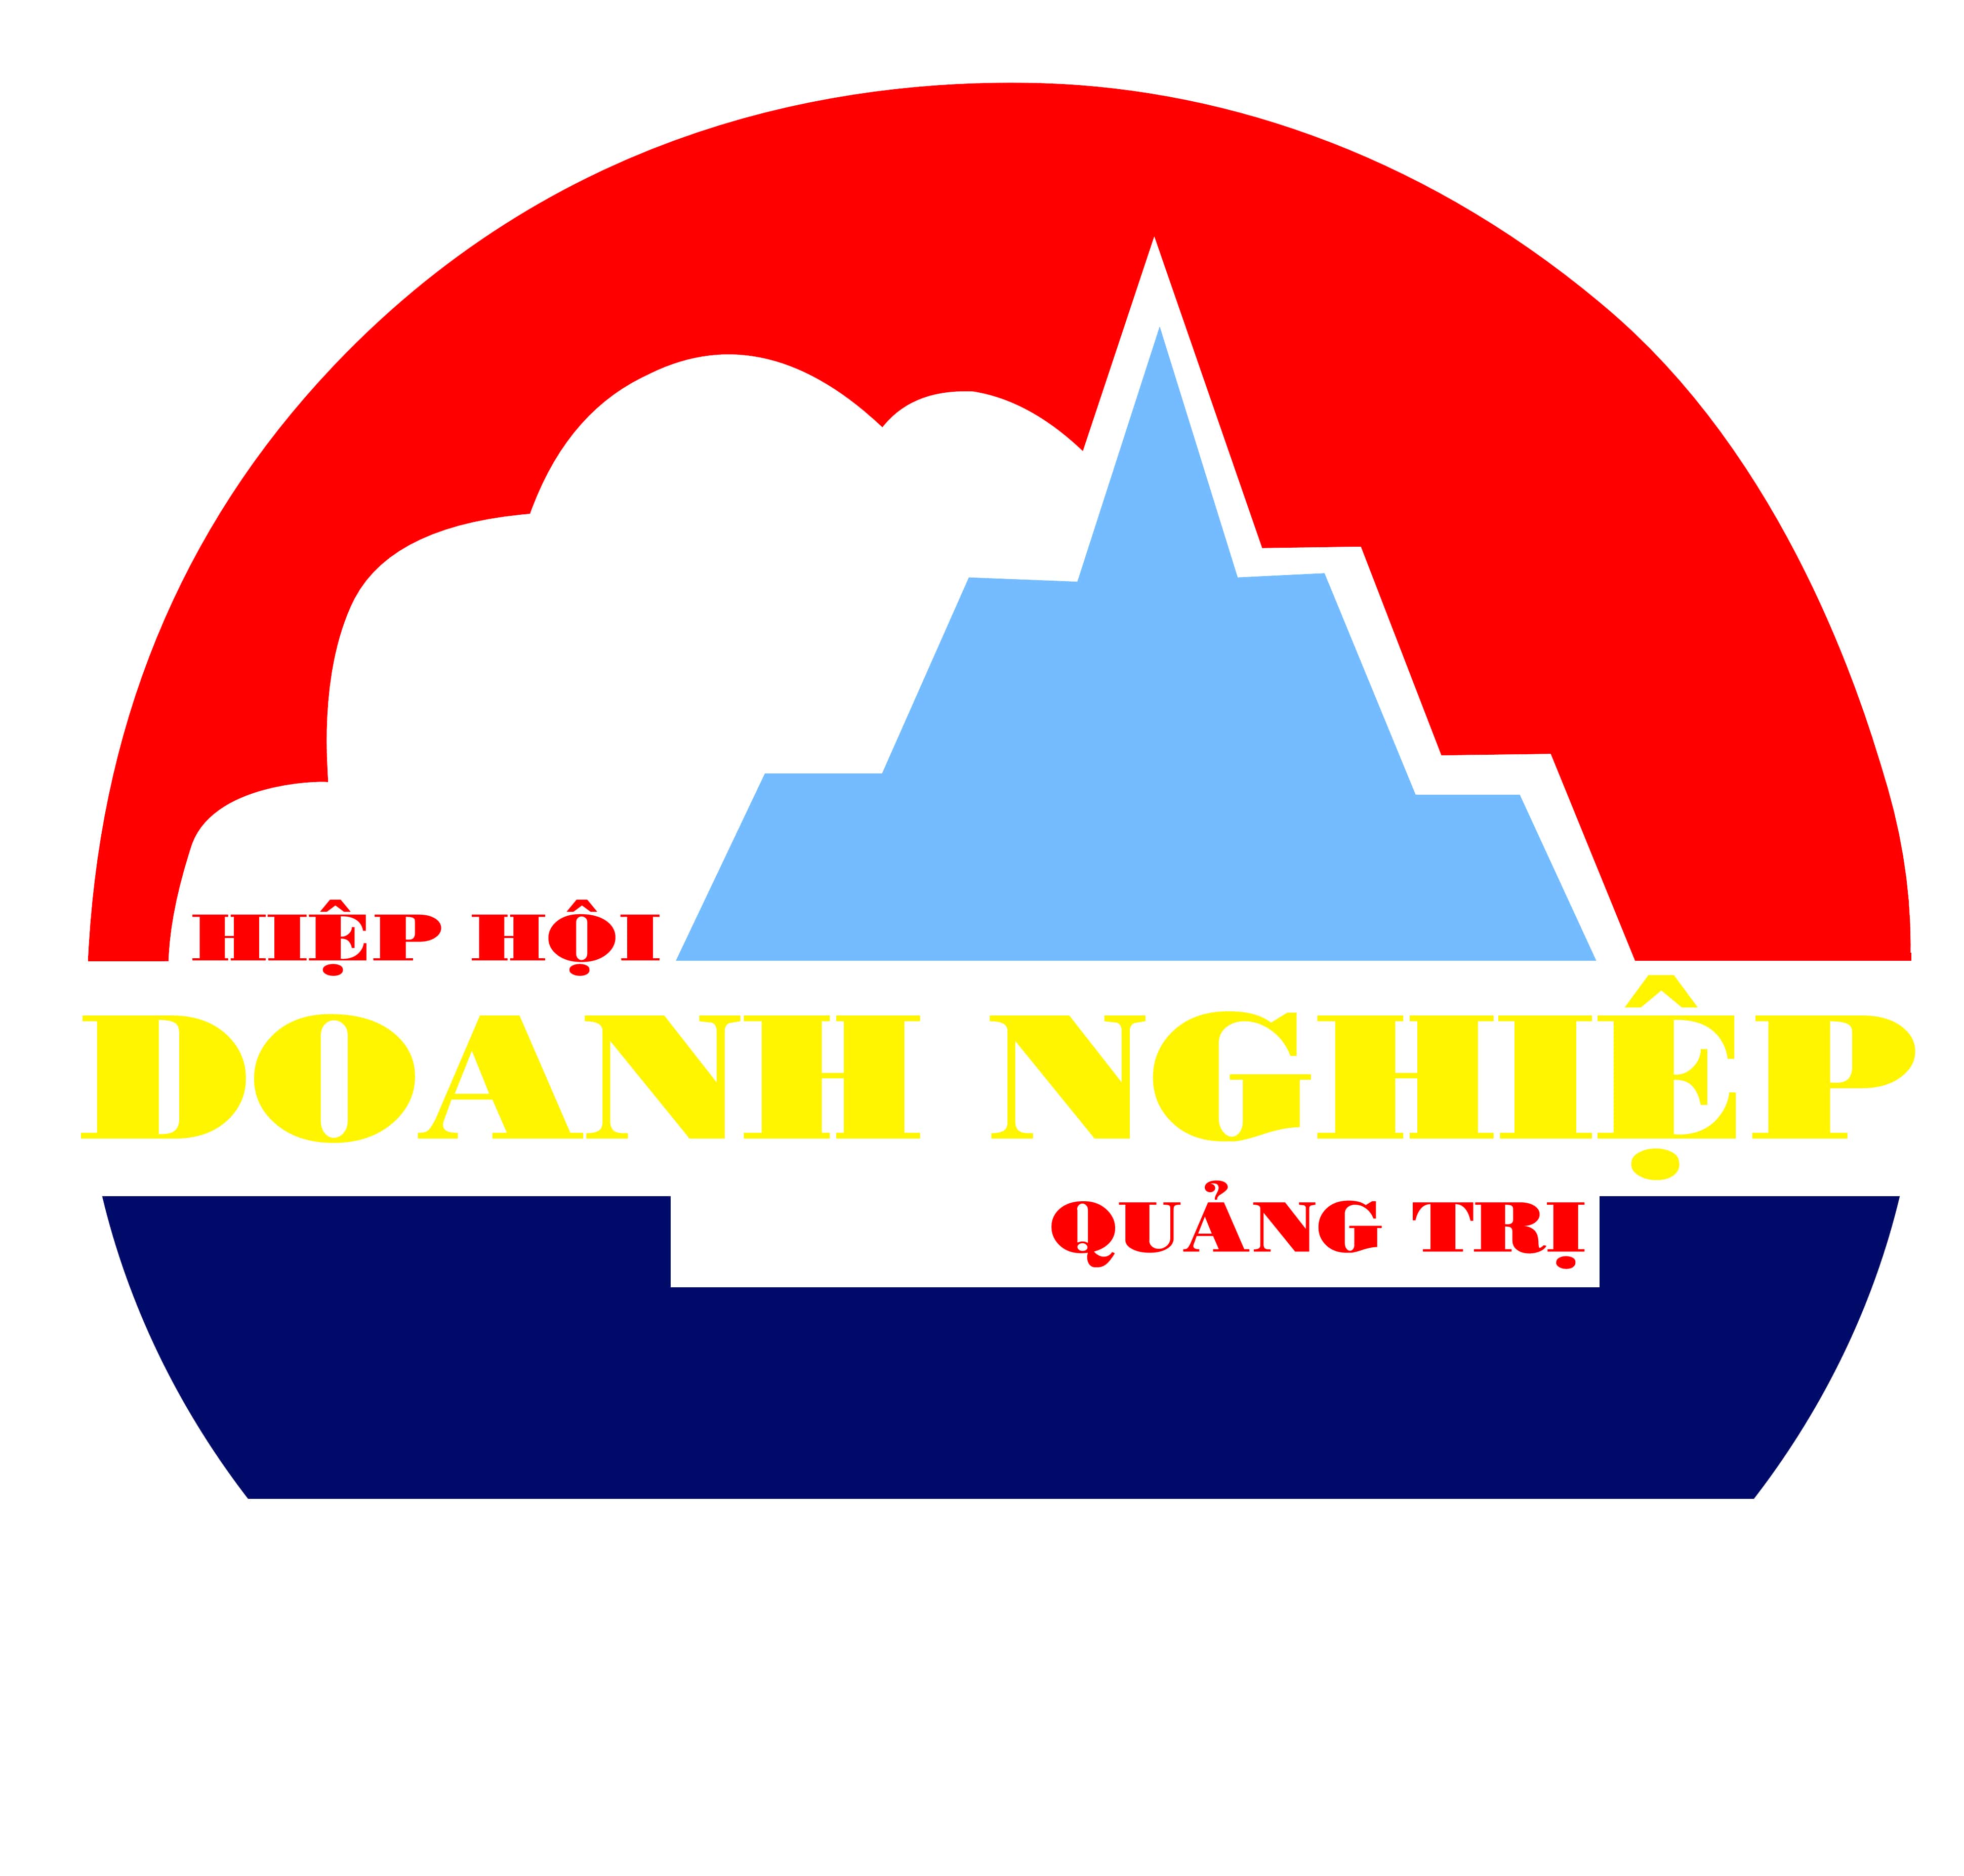 Business Association of Quang Tri Province